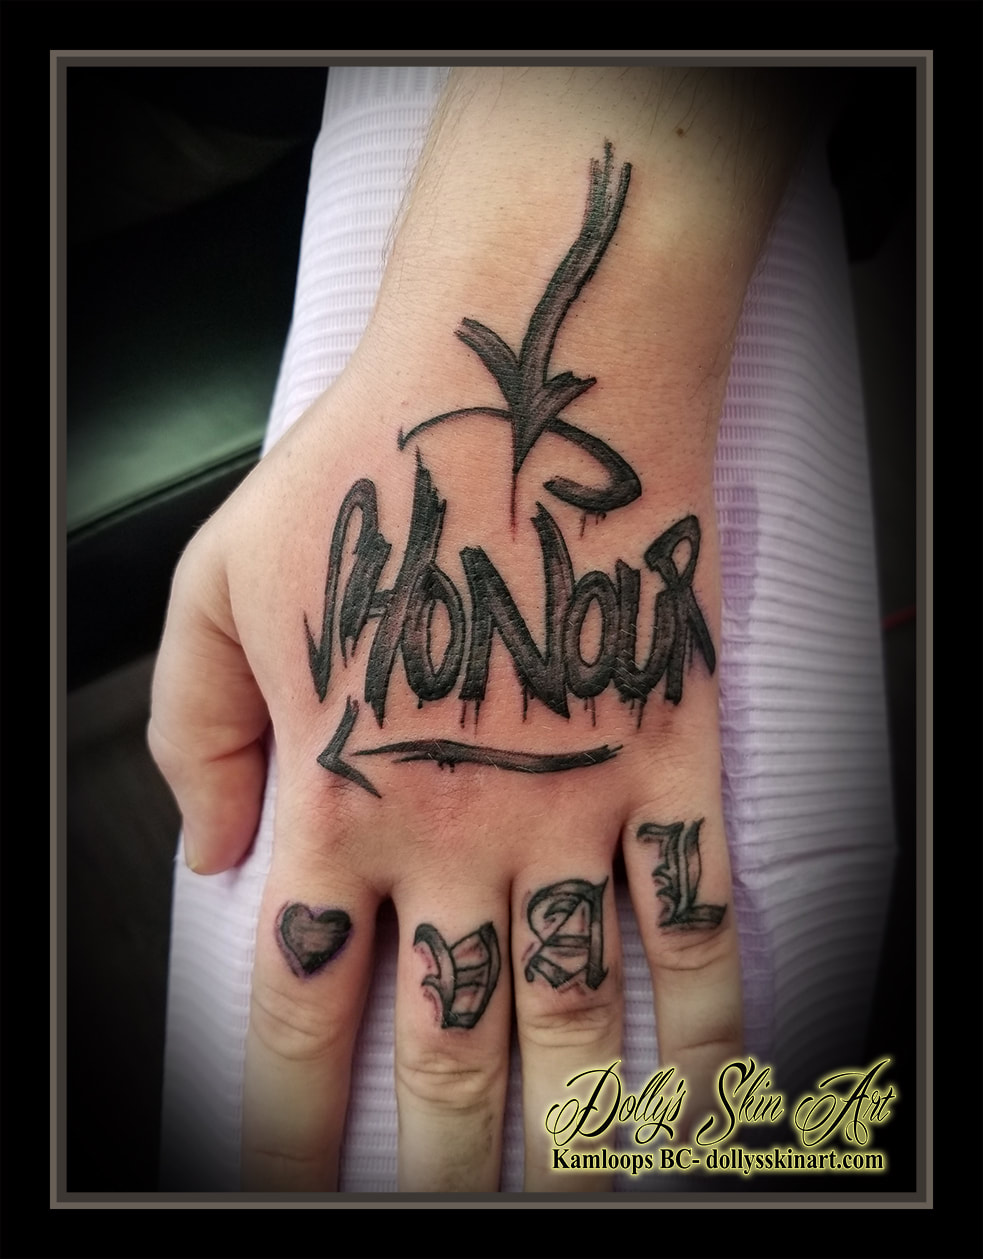 honour tattoo hand lettering font script black shading heart Val memorial tattoo kamloops dolly's skin art